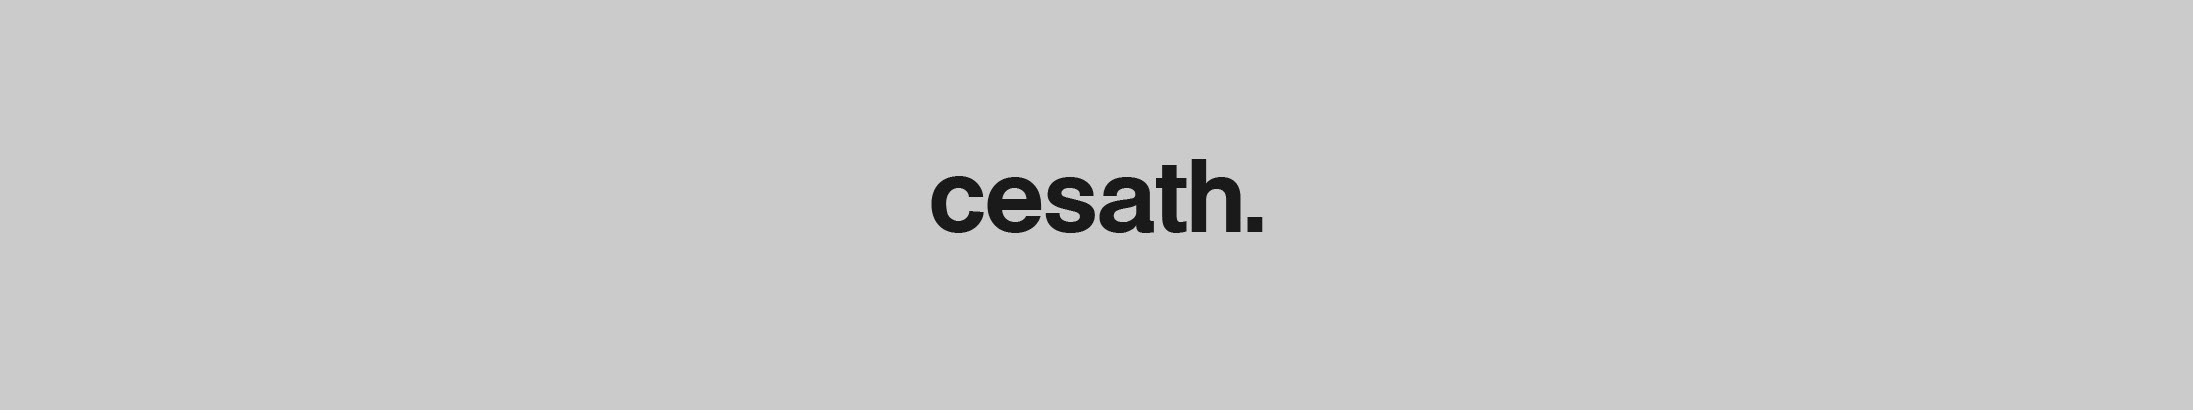 Cesath Singapore's profile banner